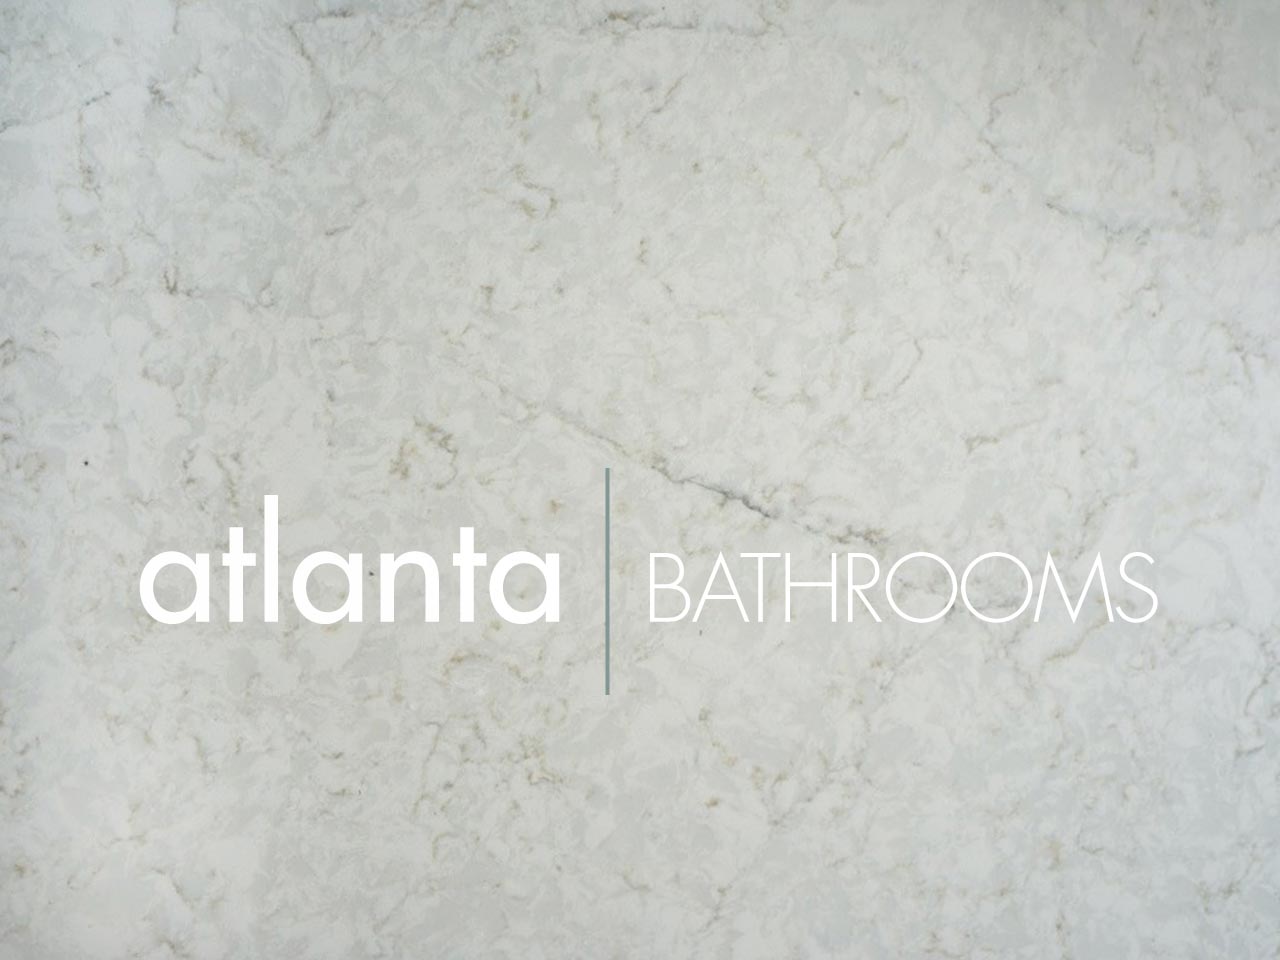 atlanta bathrooms logo